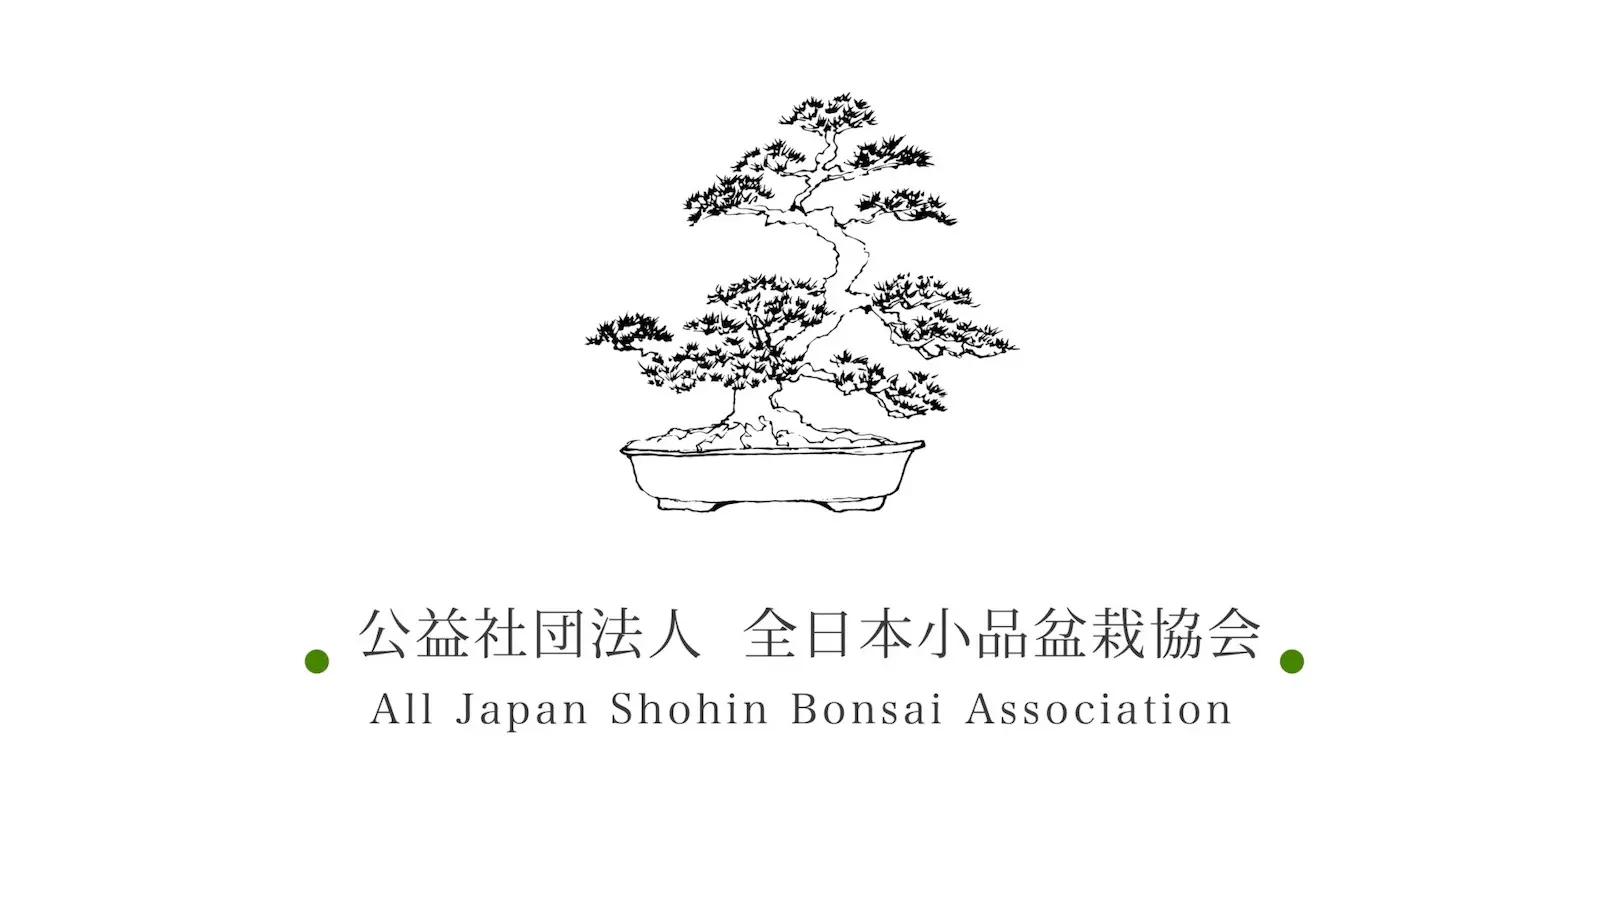 The schedule for the next shohinbonsai exhibition